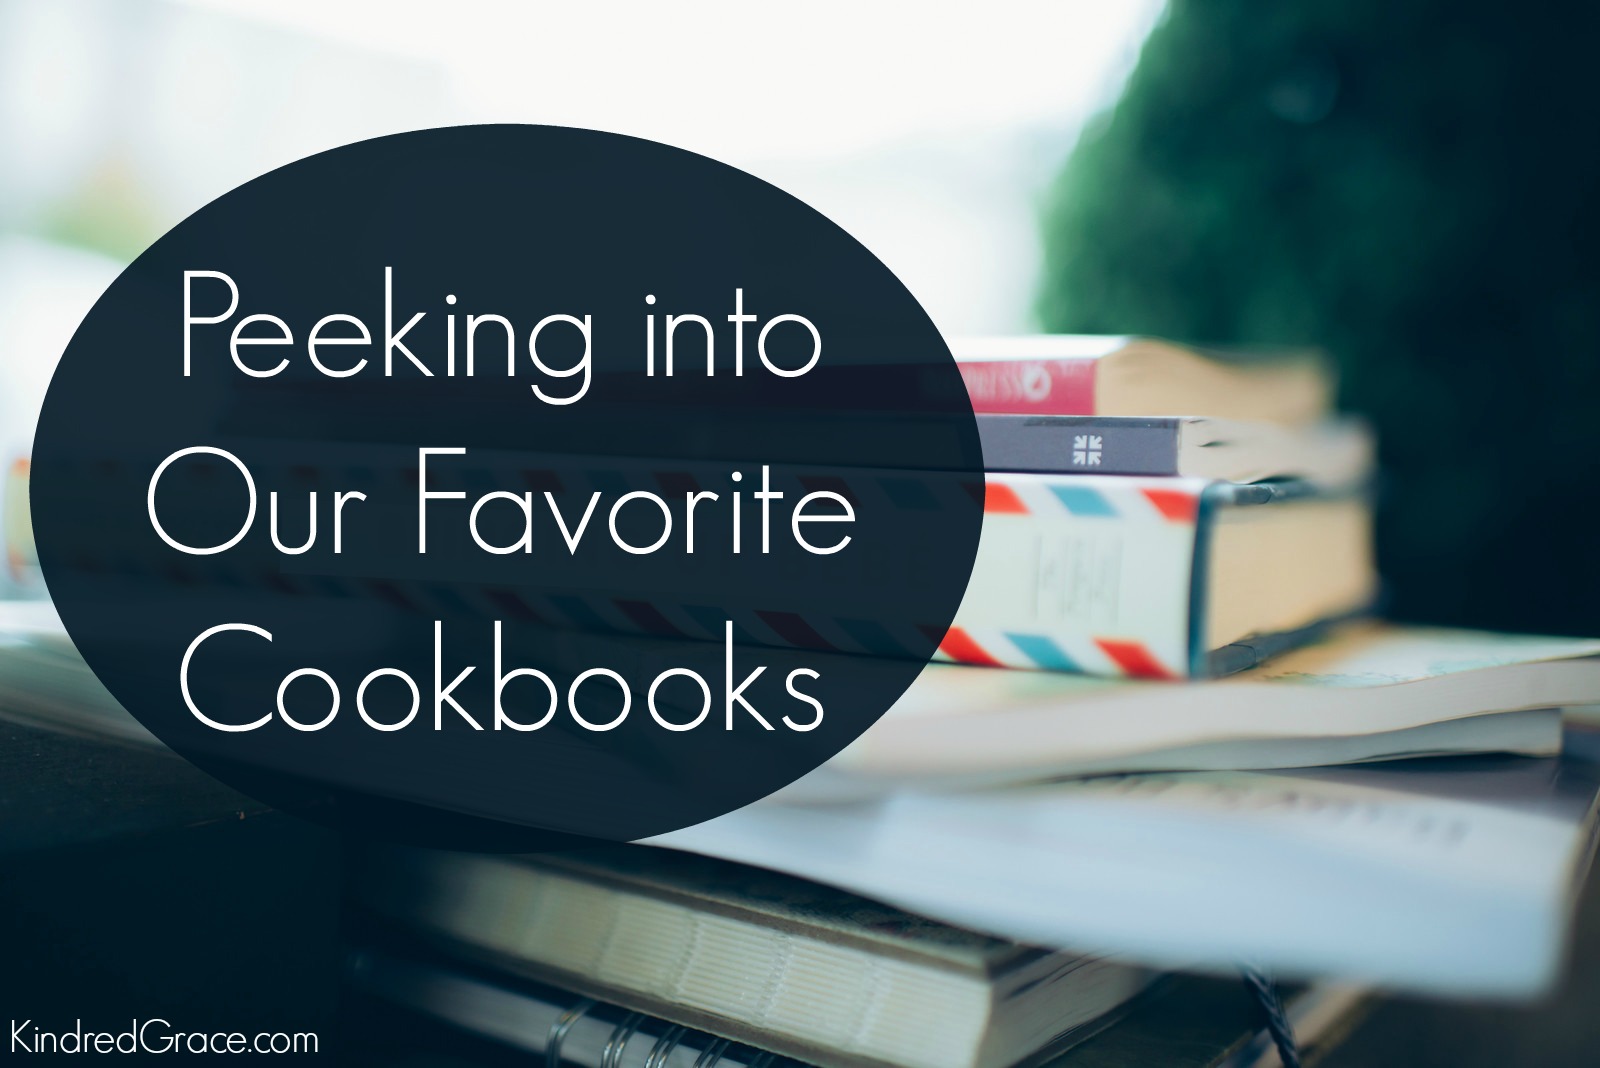 Peeking into Our Favorite Cookbooks